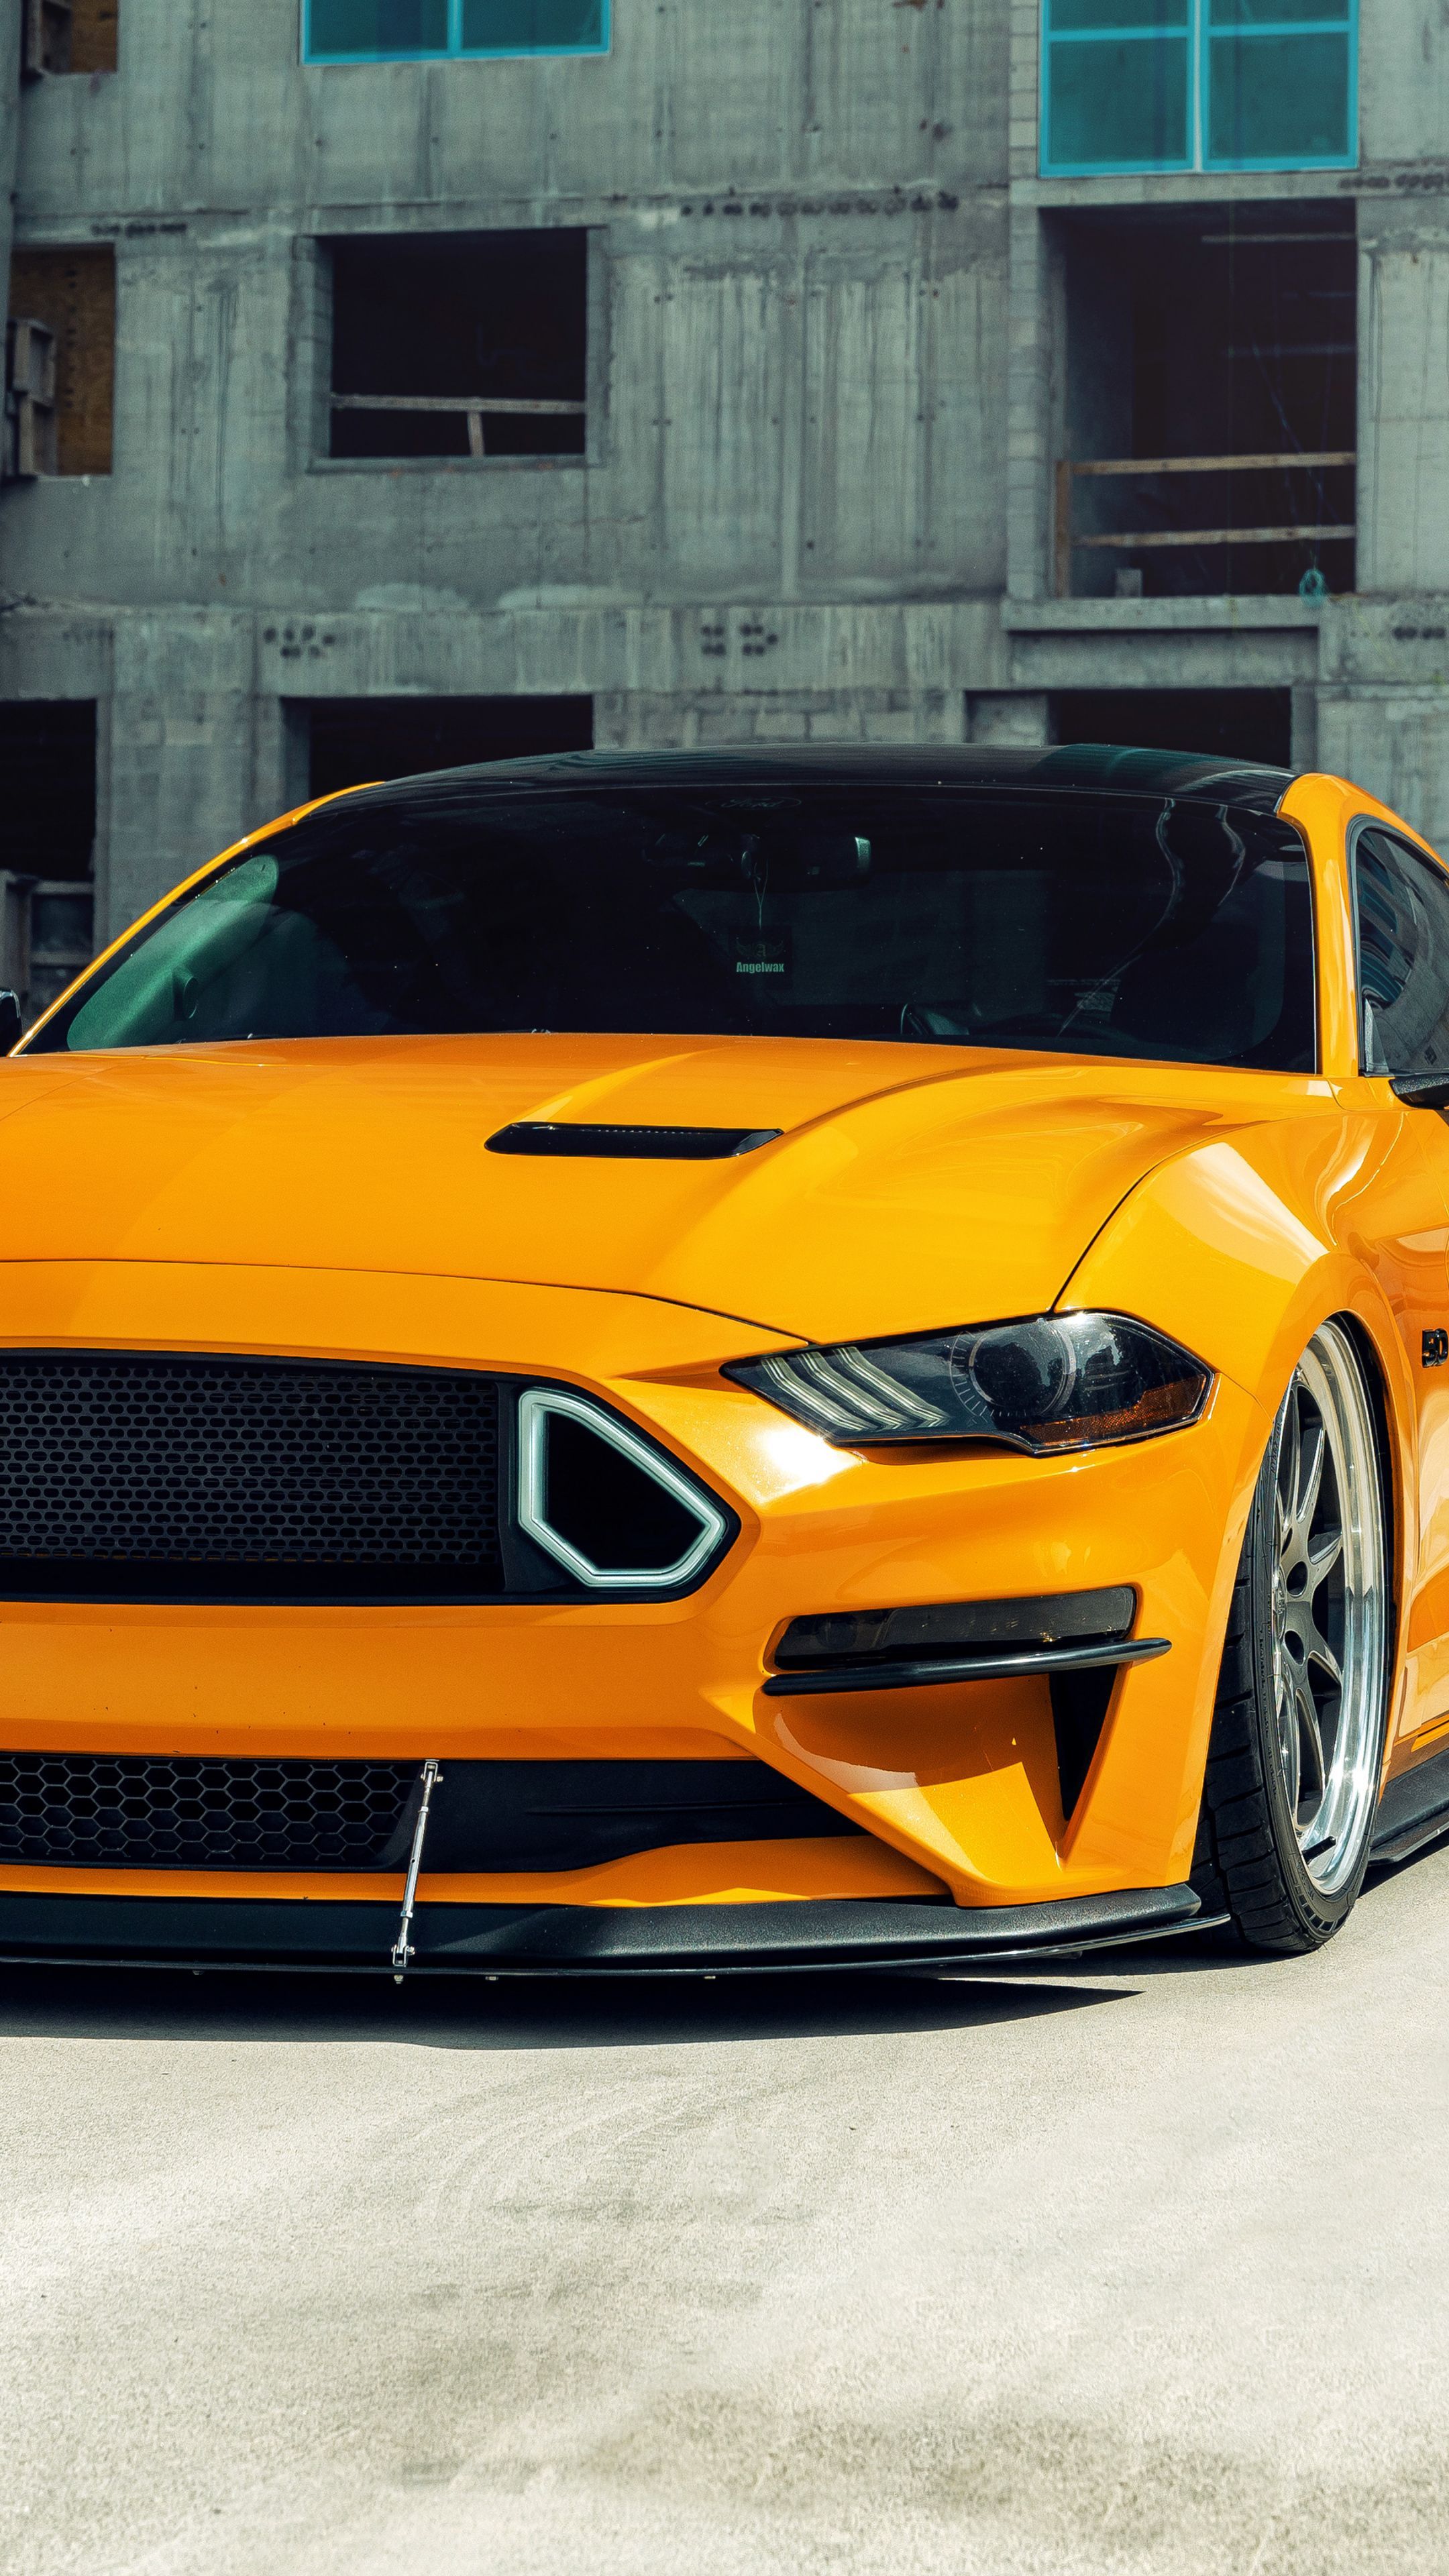 Yellow Ford Mustang GT, 2020 wallpaper. Mustang gt, Ford mustang, Ford mustang gt